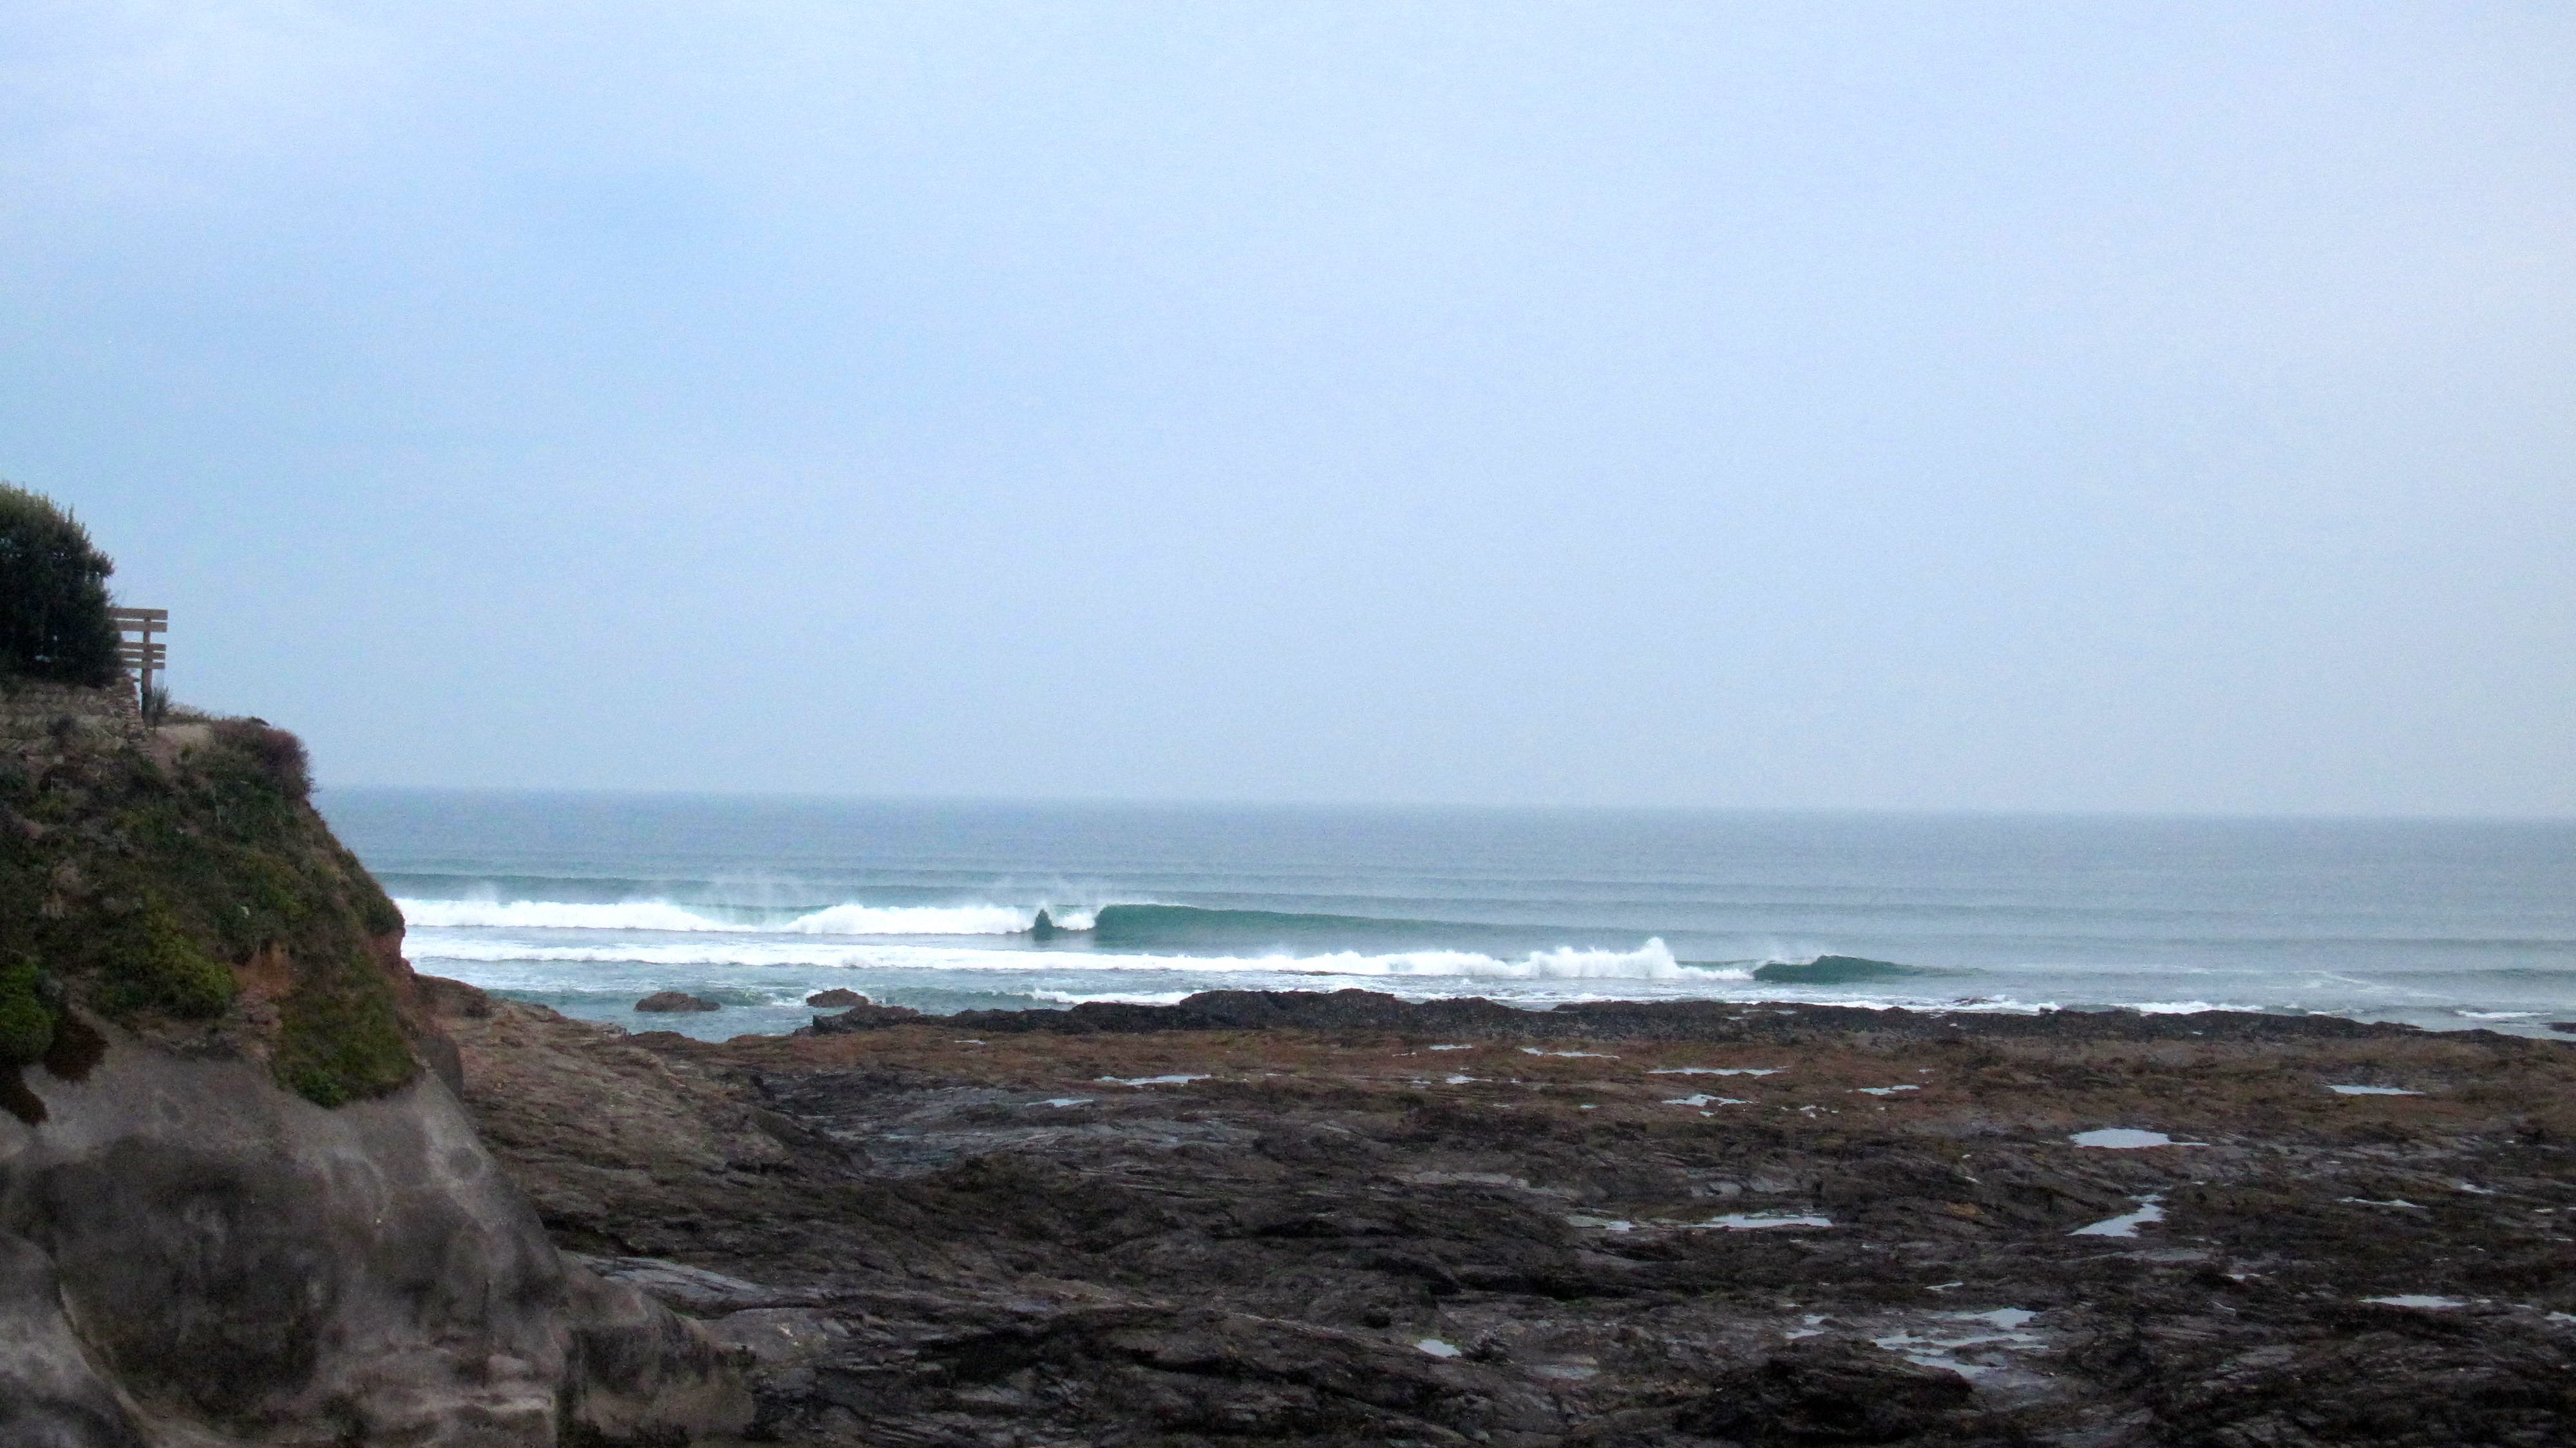 Surf Report for Wednesday 17th September 2014